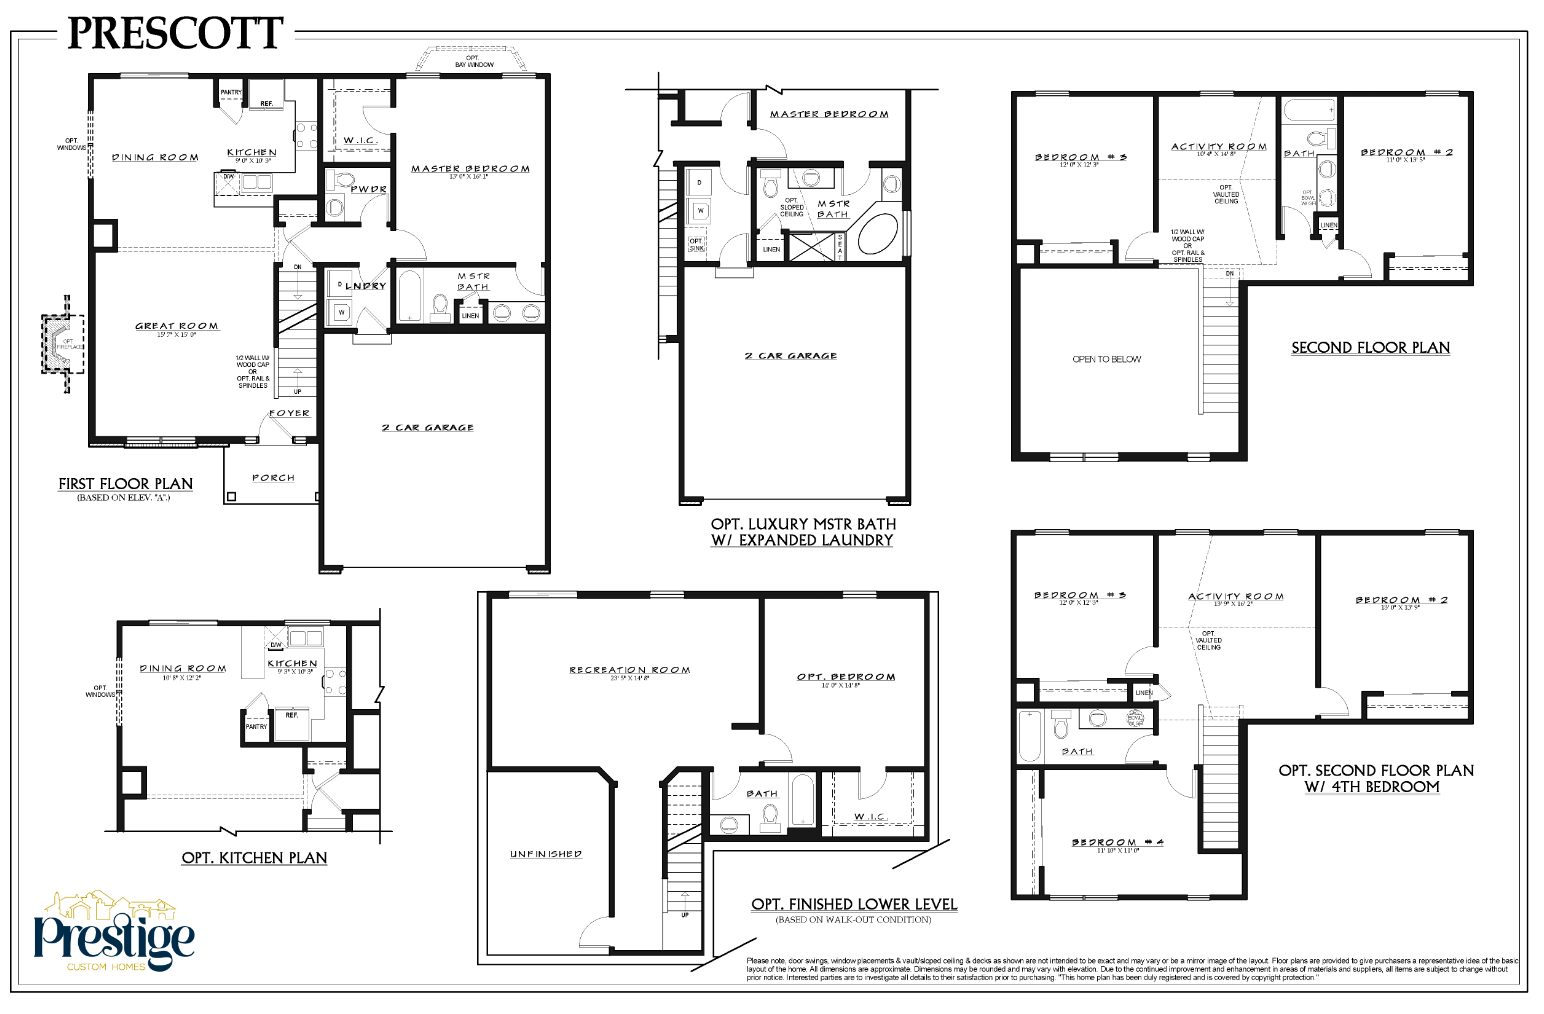 prescott-floor-plan-prestige-custom-homes